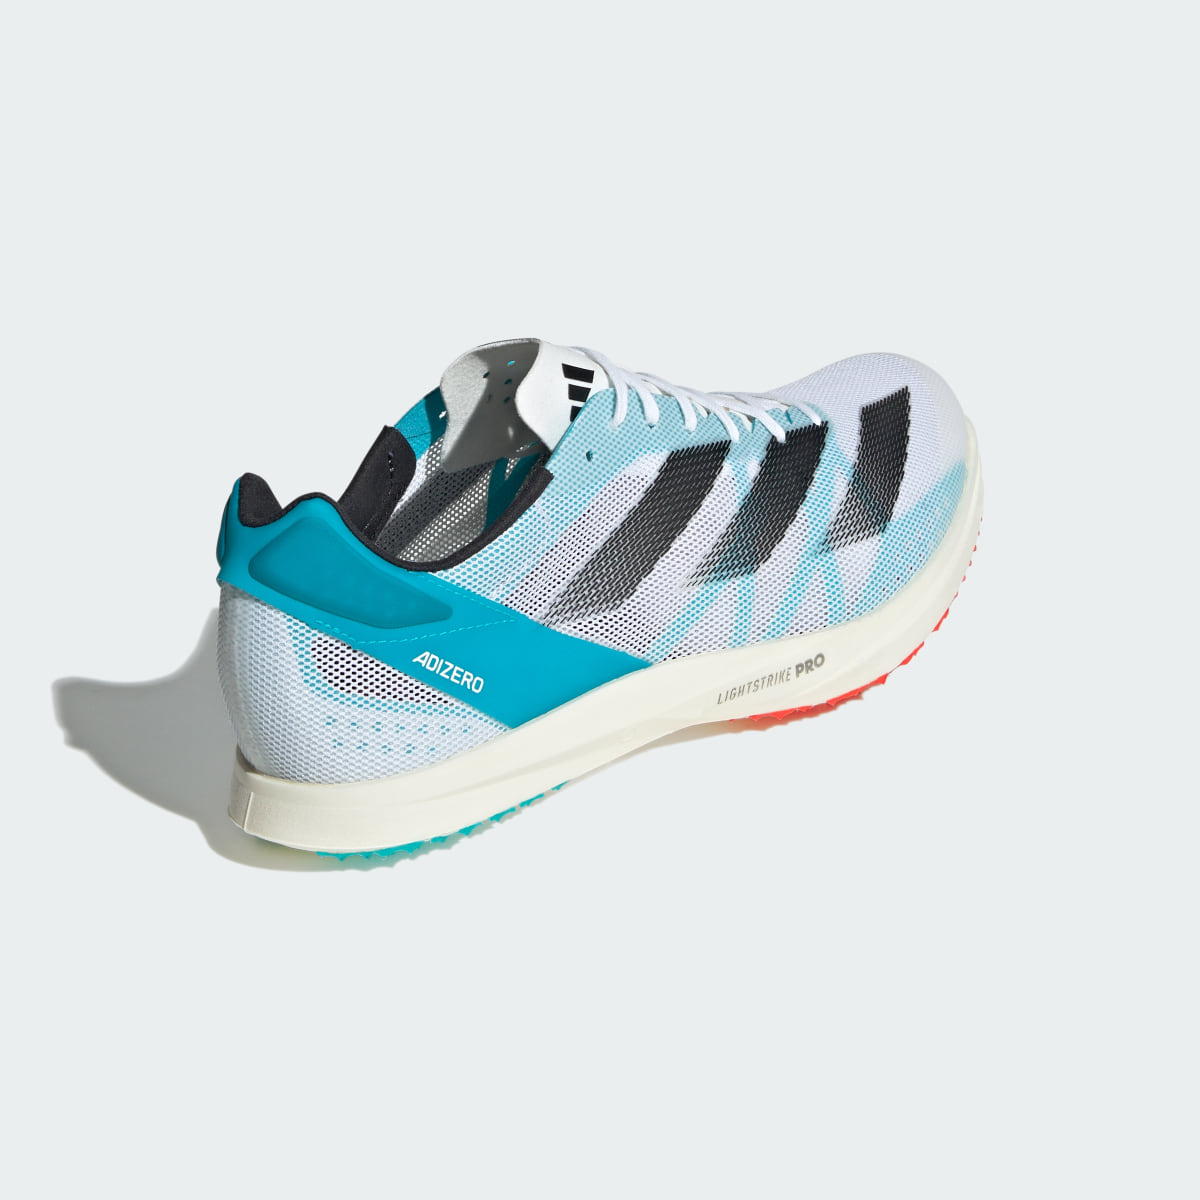 Adidas Scarpe da atletica leggera adizero Avanti Tyo Lightstrike. 5